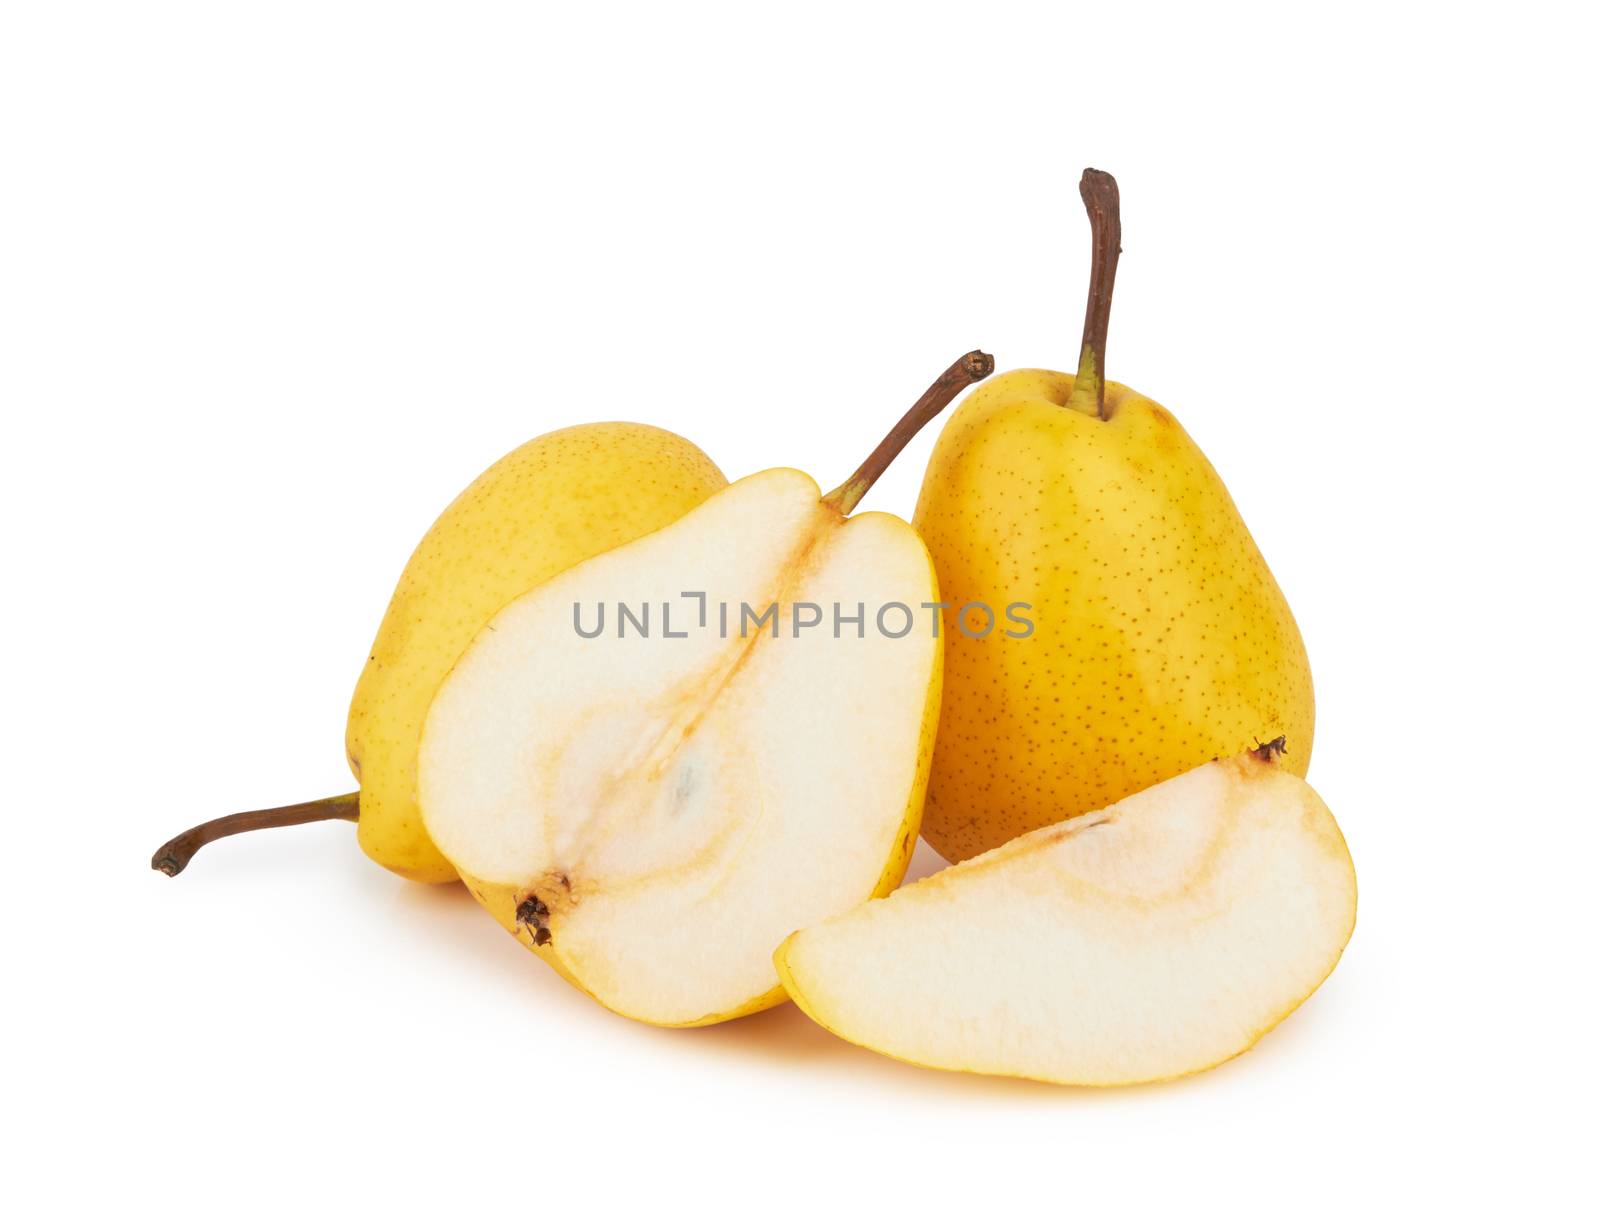 pears on white by pioneer111